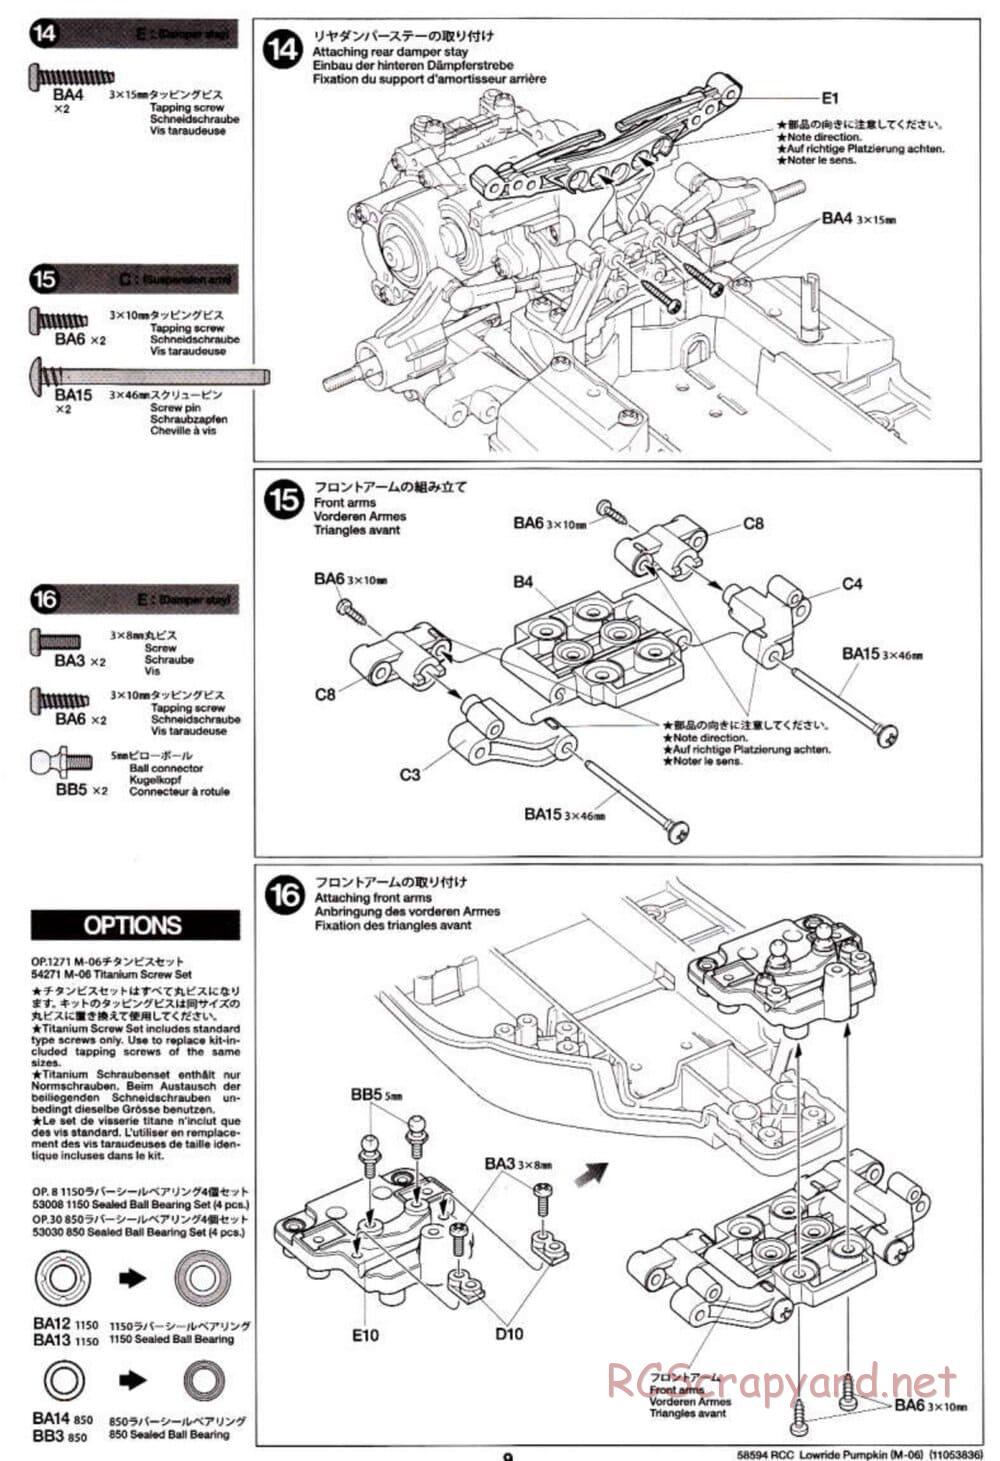 Tamiya - Lowride Pumpkin - M-06 Chassis - Manual - Page 9